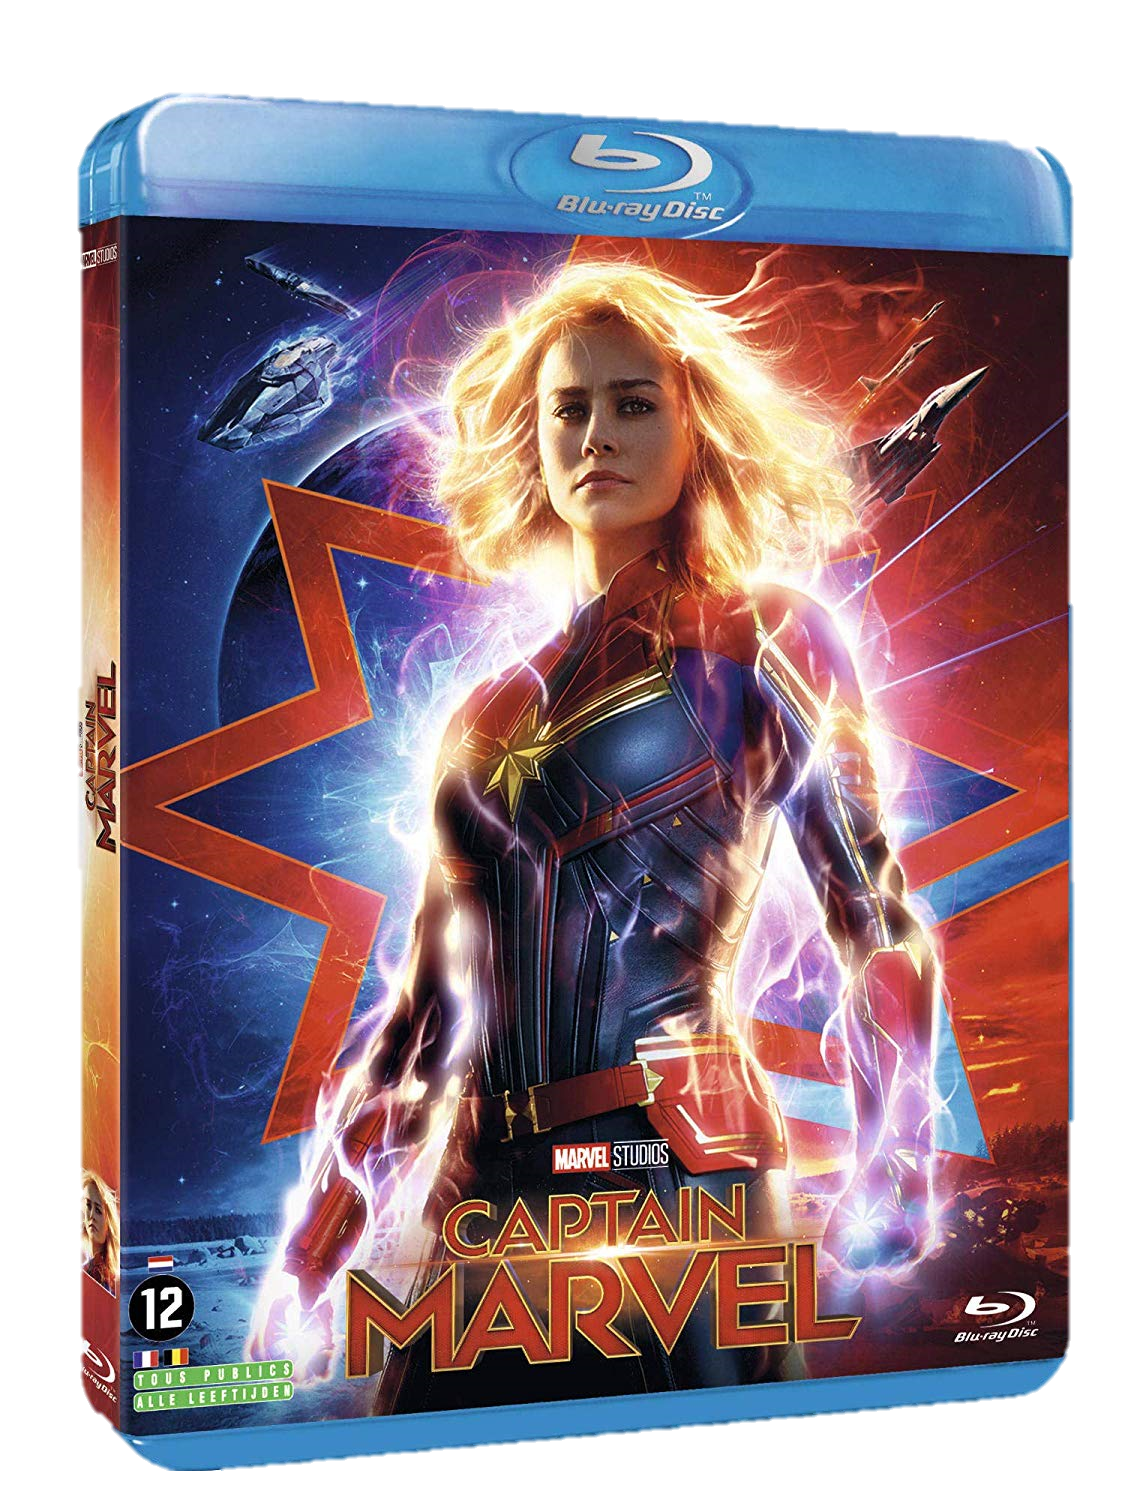 flashvideofilm - Captain Marvel " Blu-ray à la location " - Location